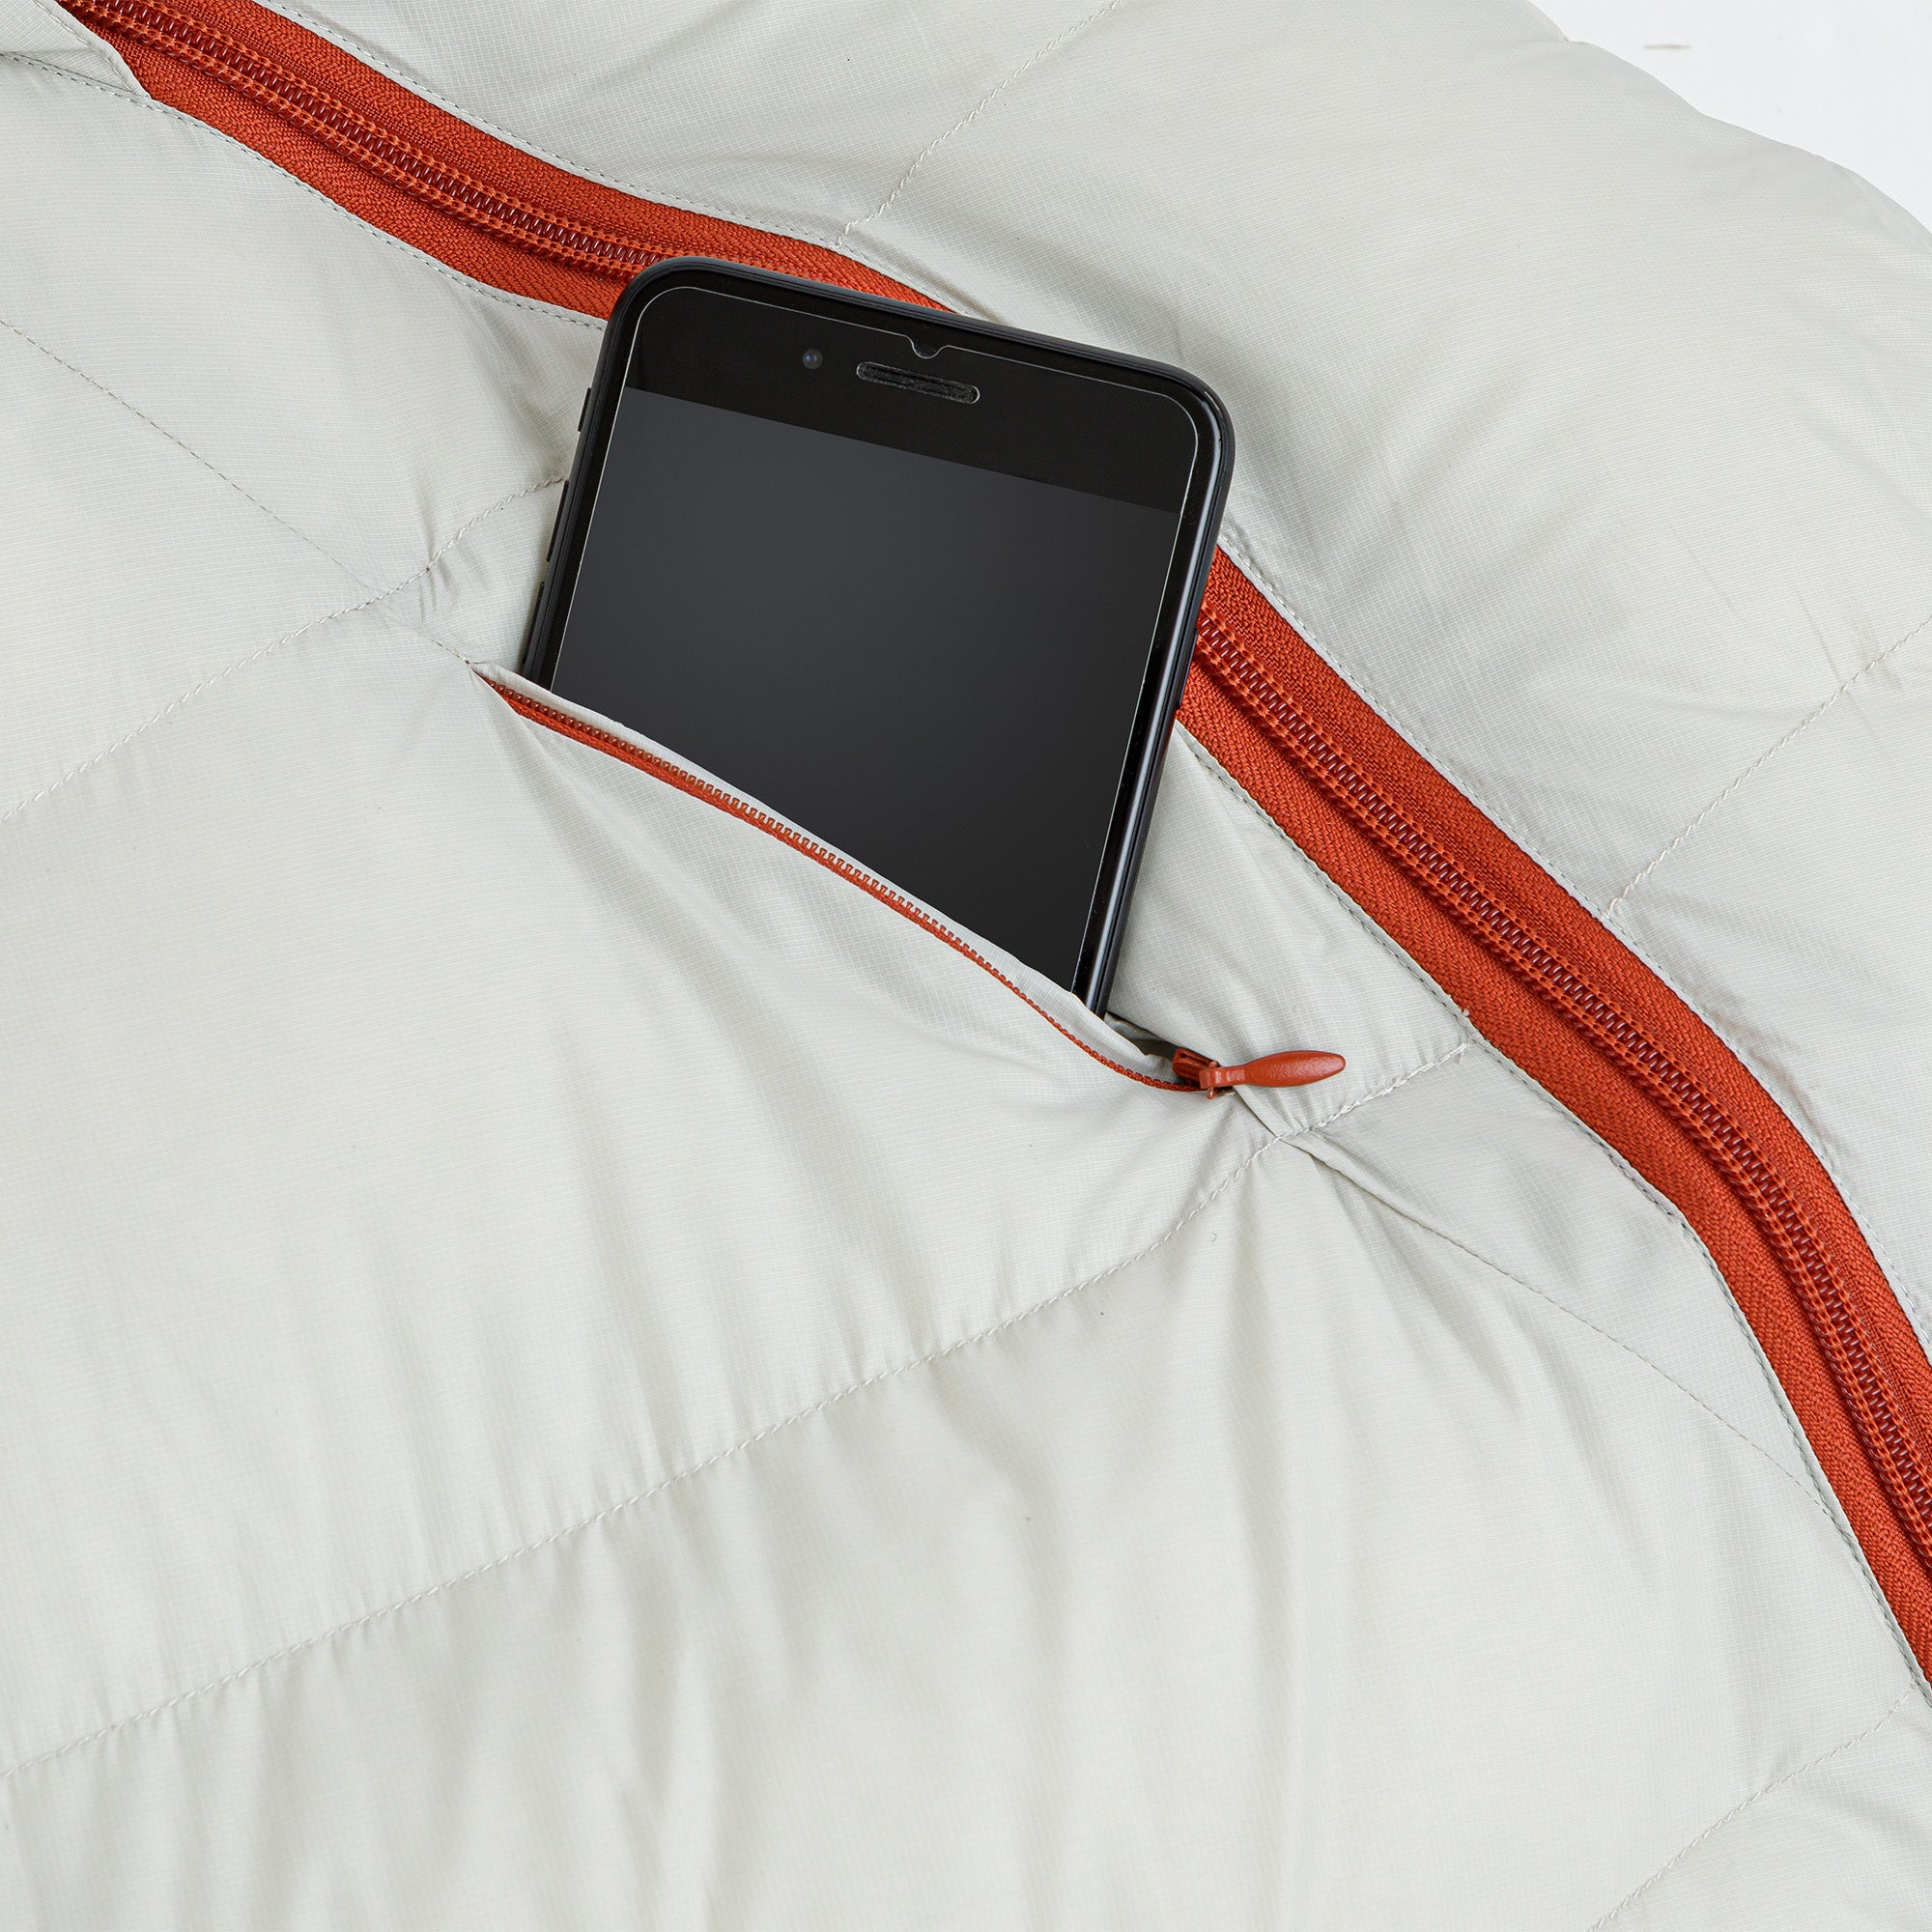 Synthetic Down Sleeping Bag 30°F Hybrid Shape (Regular Size)